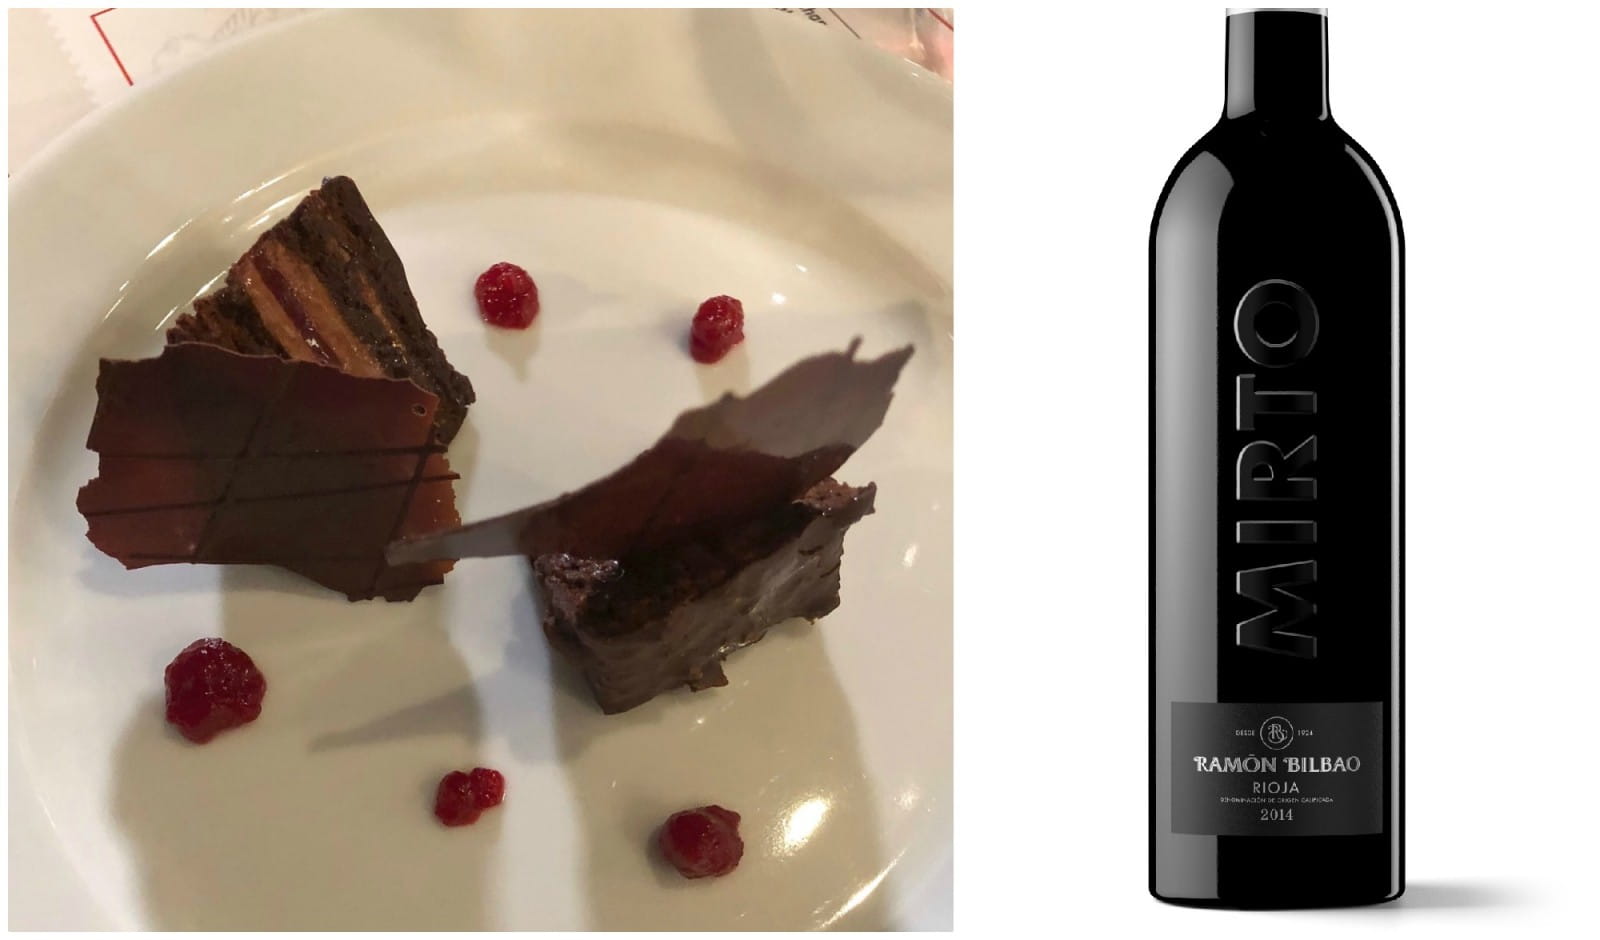 Chocolate layer cake and single vineyard rioja